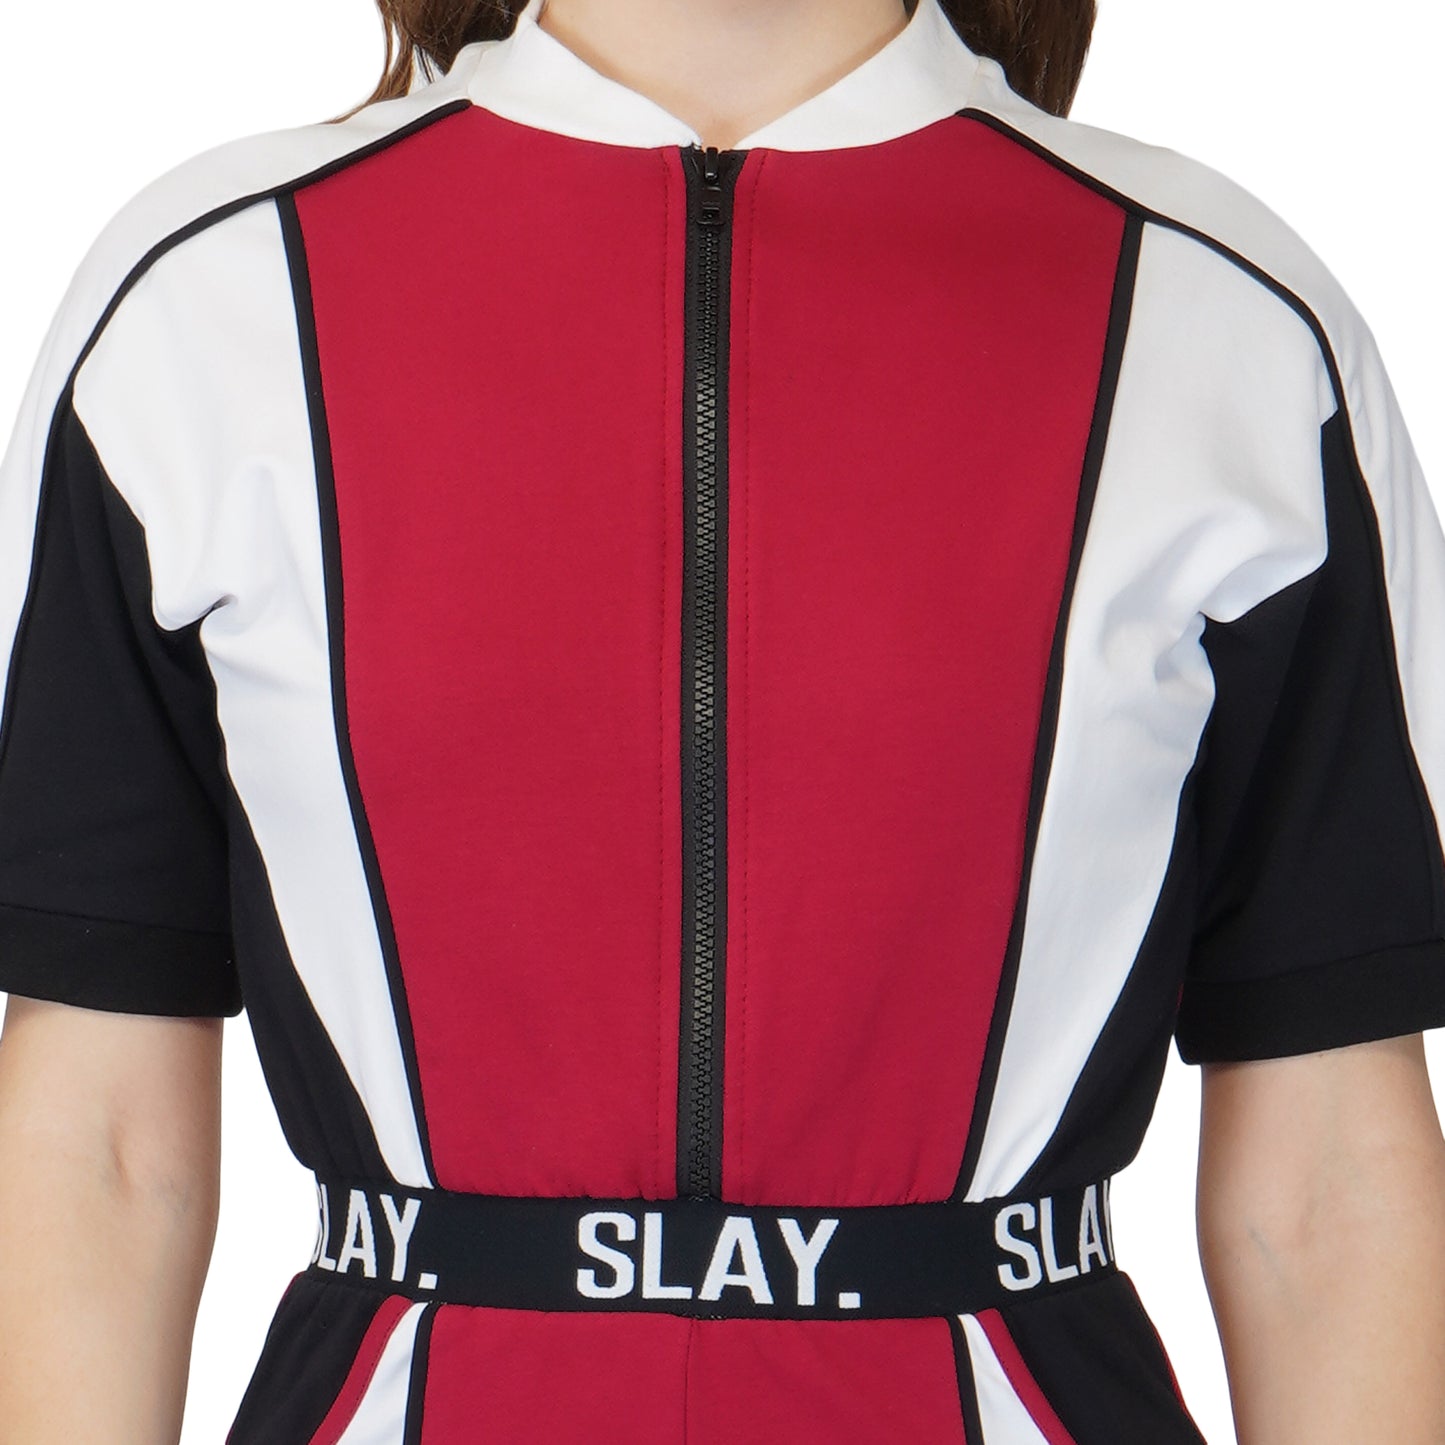 SLAY. Women's Colorblock Romper Red Black White